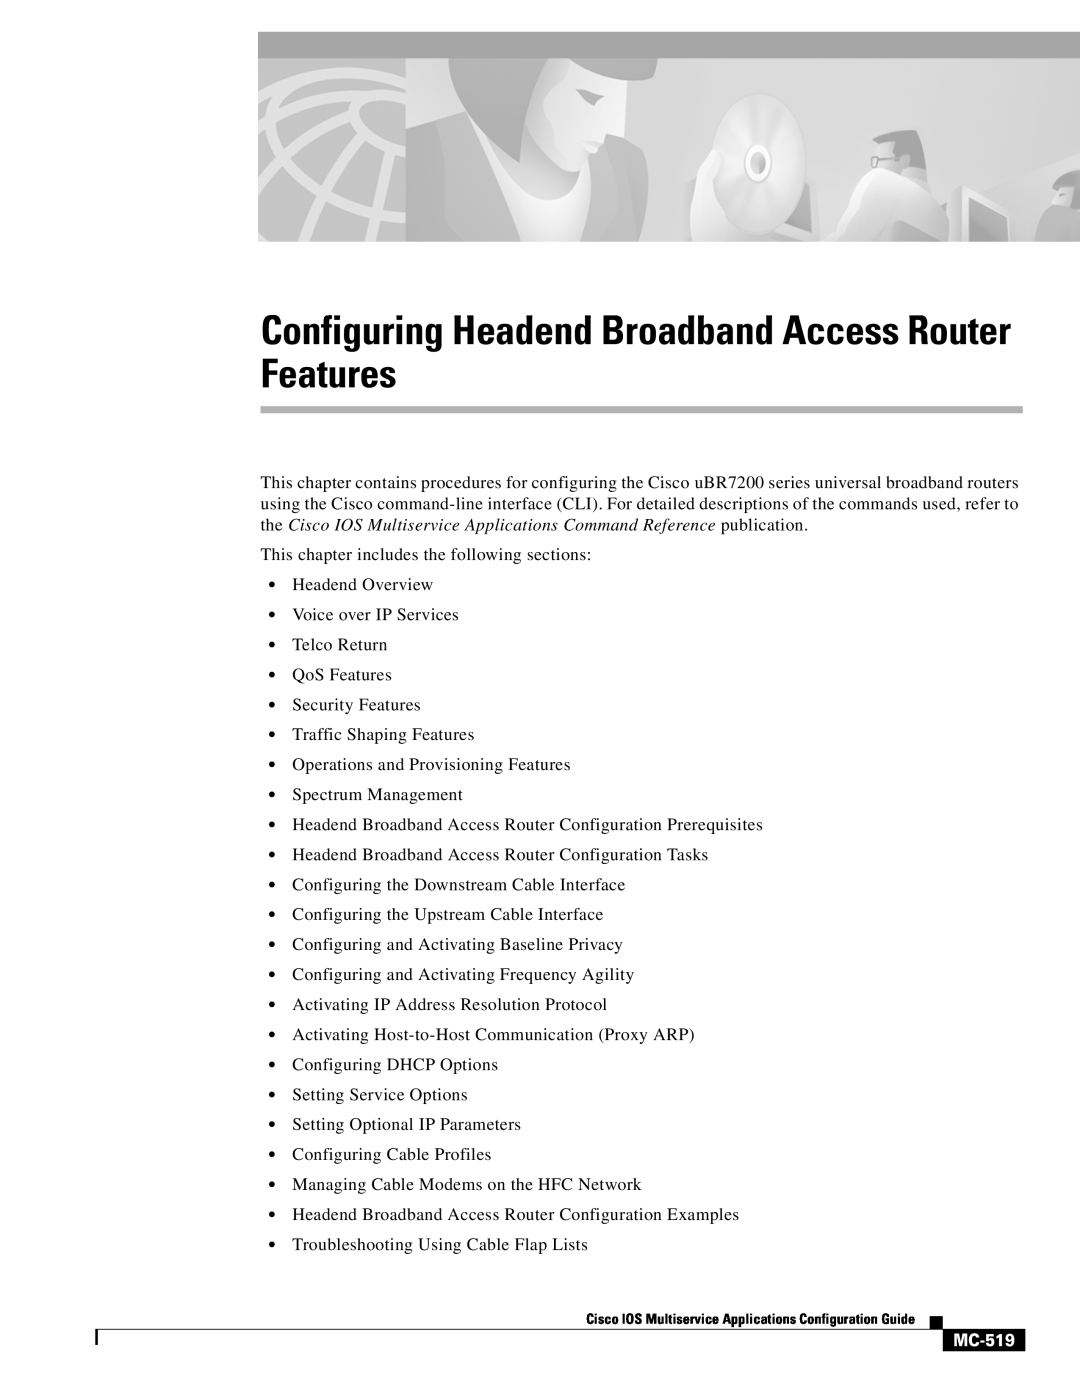 Cisco Systems uBR7200 manual MC-519, Configuring Headend Broadband Access Router Features 